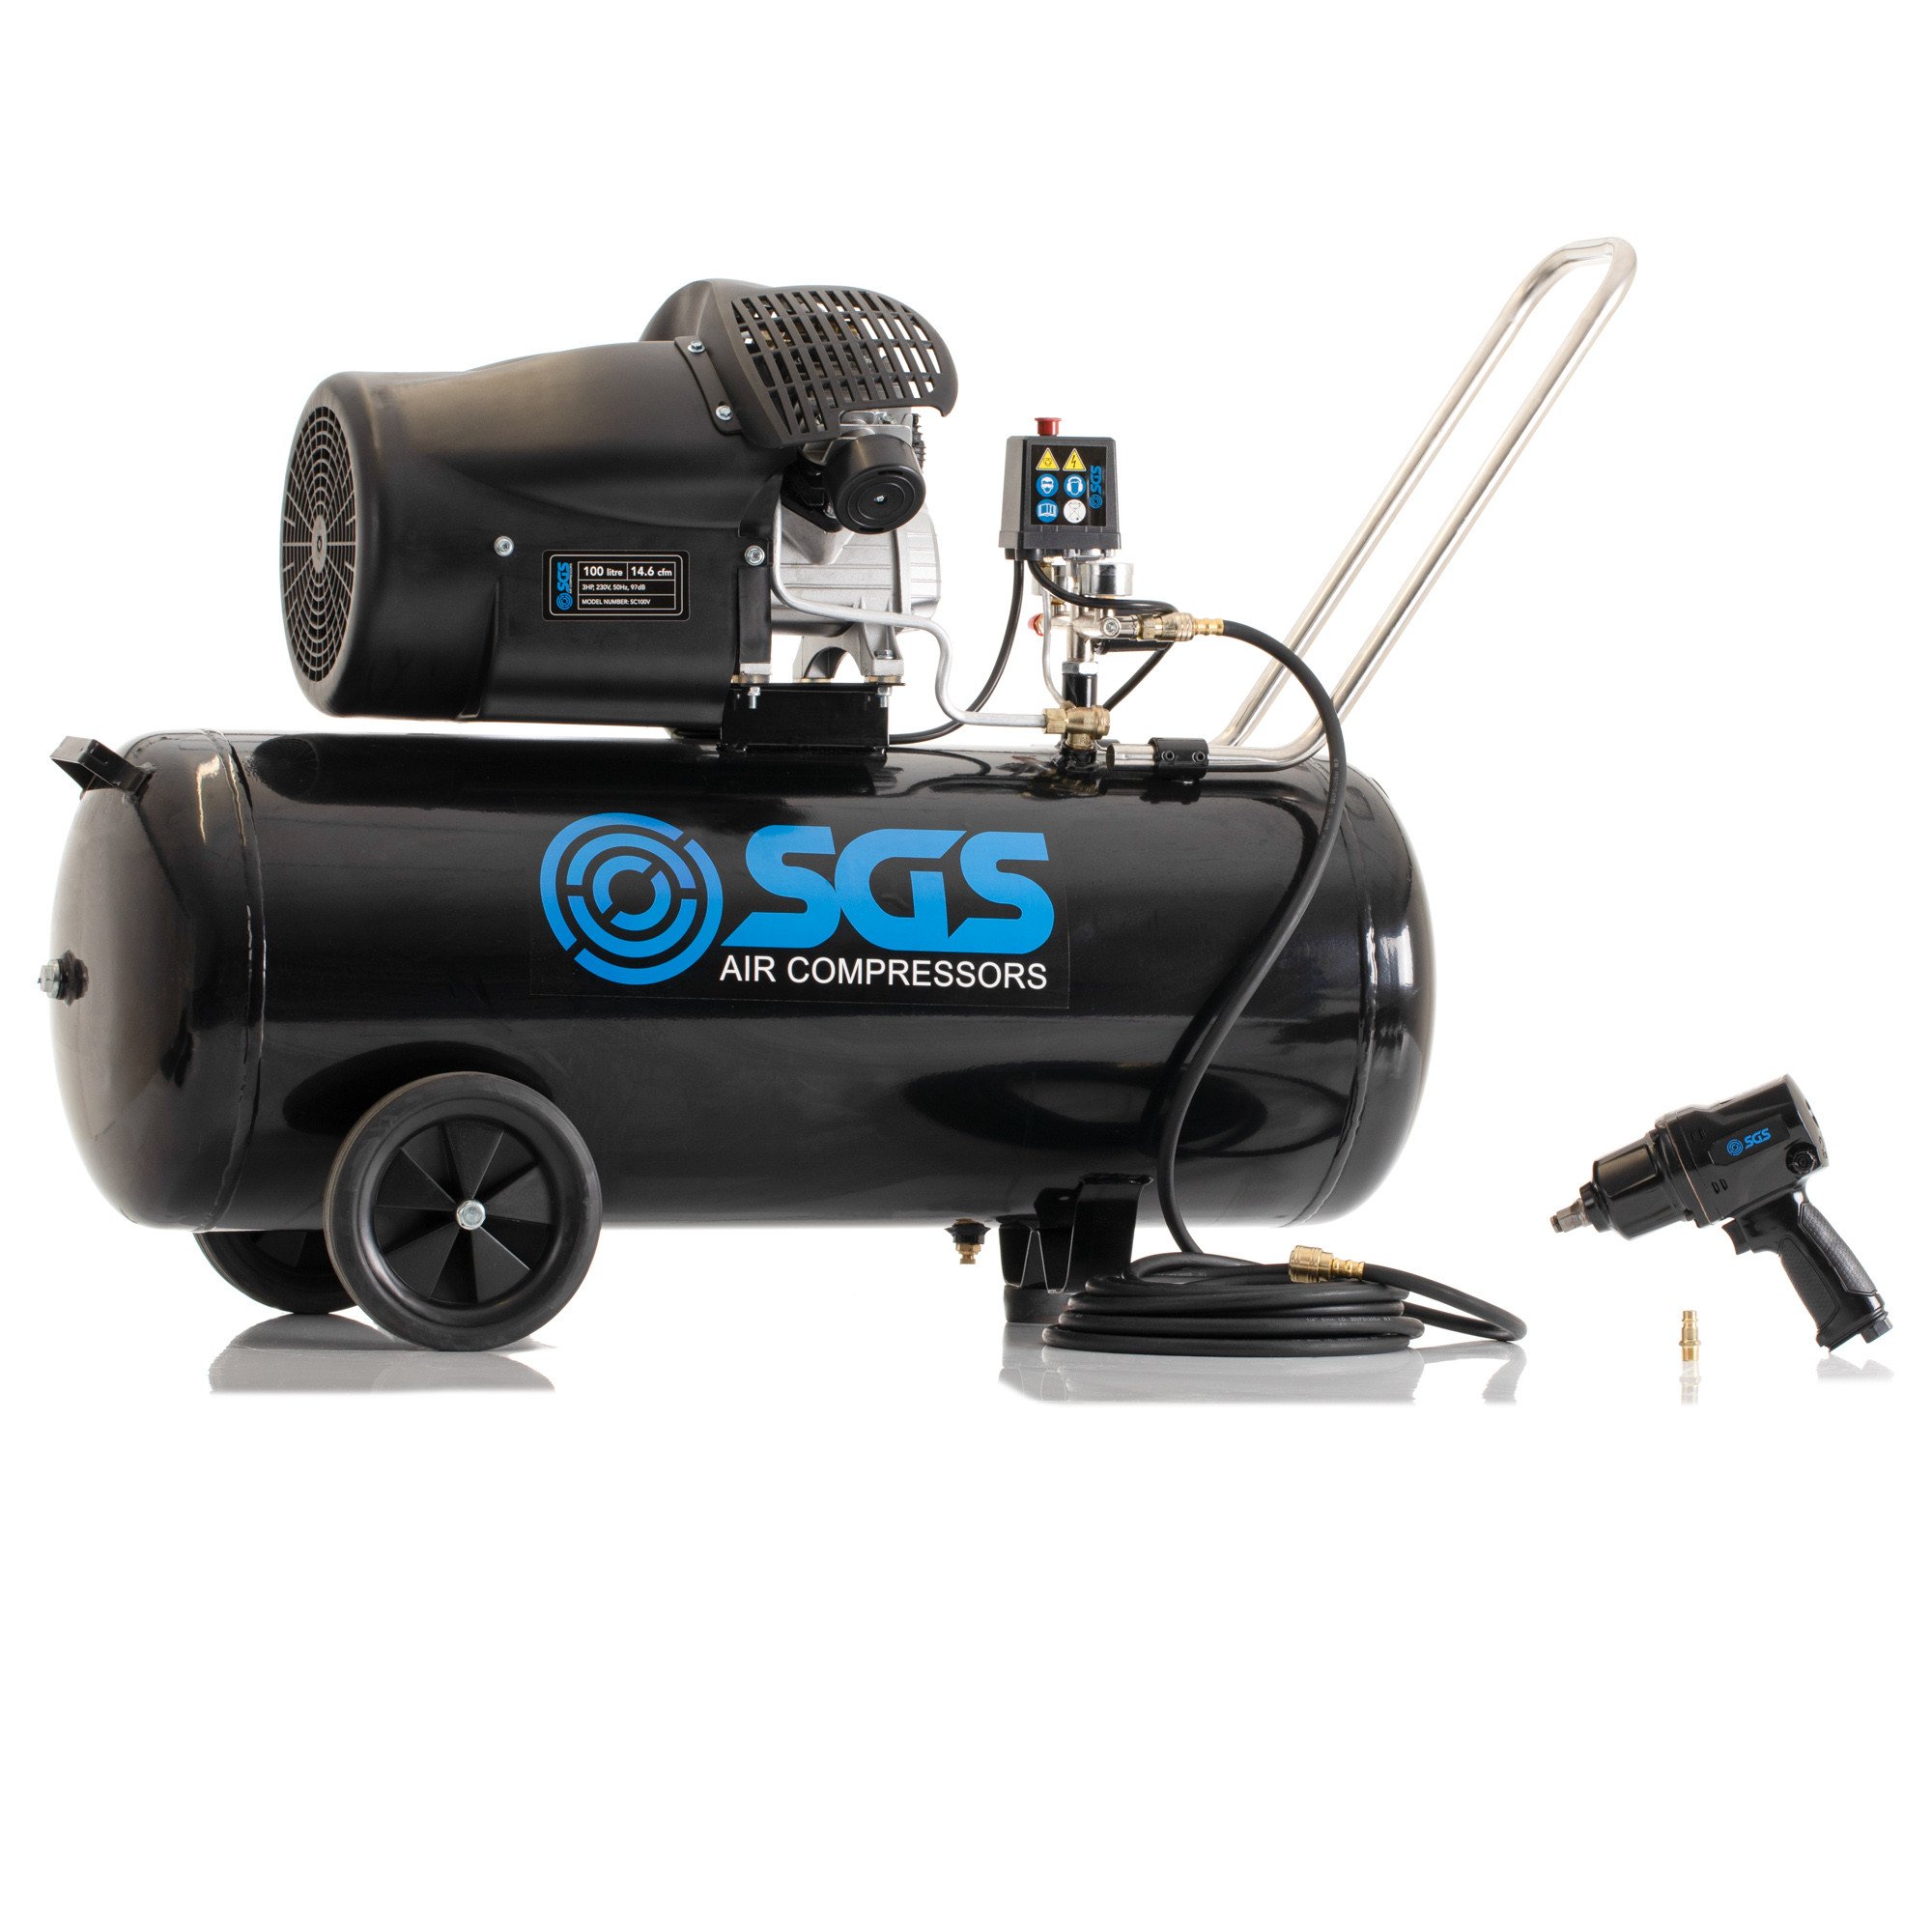 SGS 100升直接驱动空气压缩机和880nm空气冲击扳手套件-14.6CFM 3.0HP 100L